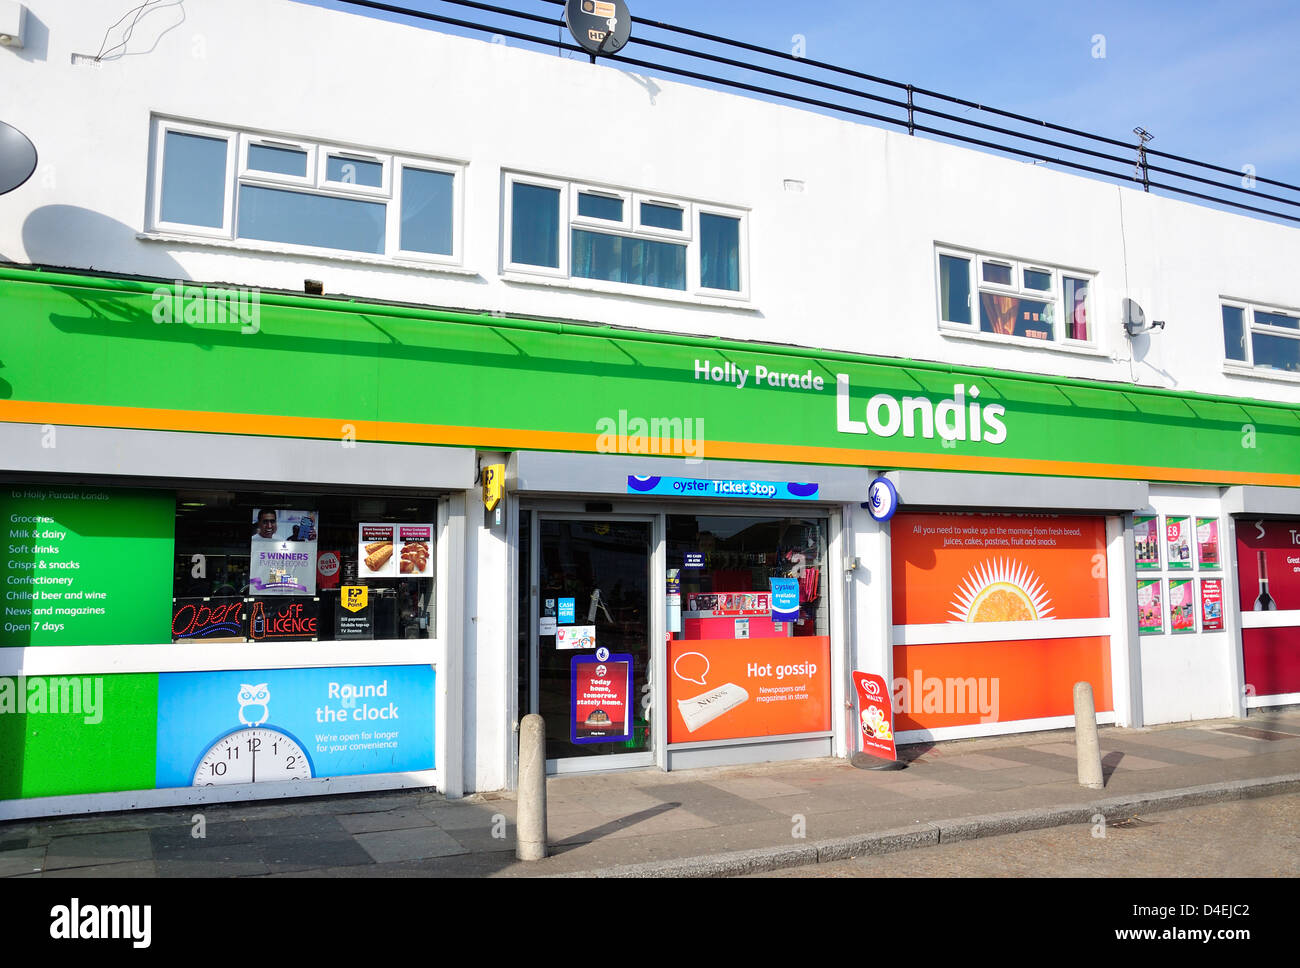 Londis convenience store, Holly Parade,High Street, Feltham, London Borough of Hounslow, Greater London, England, United Kingdom Stock Photo